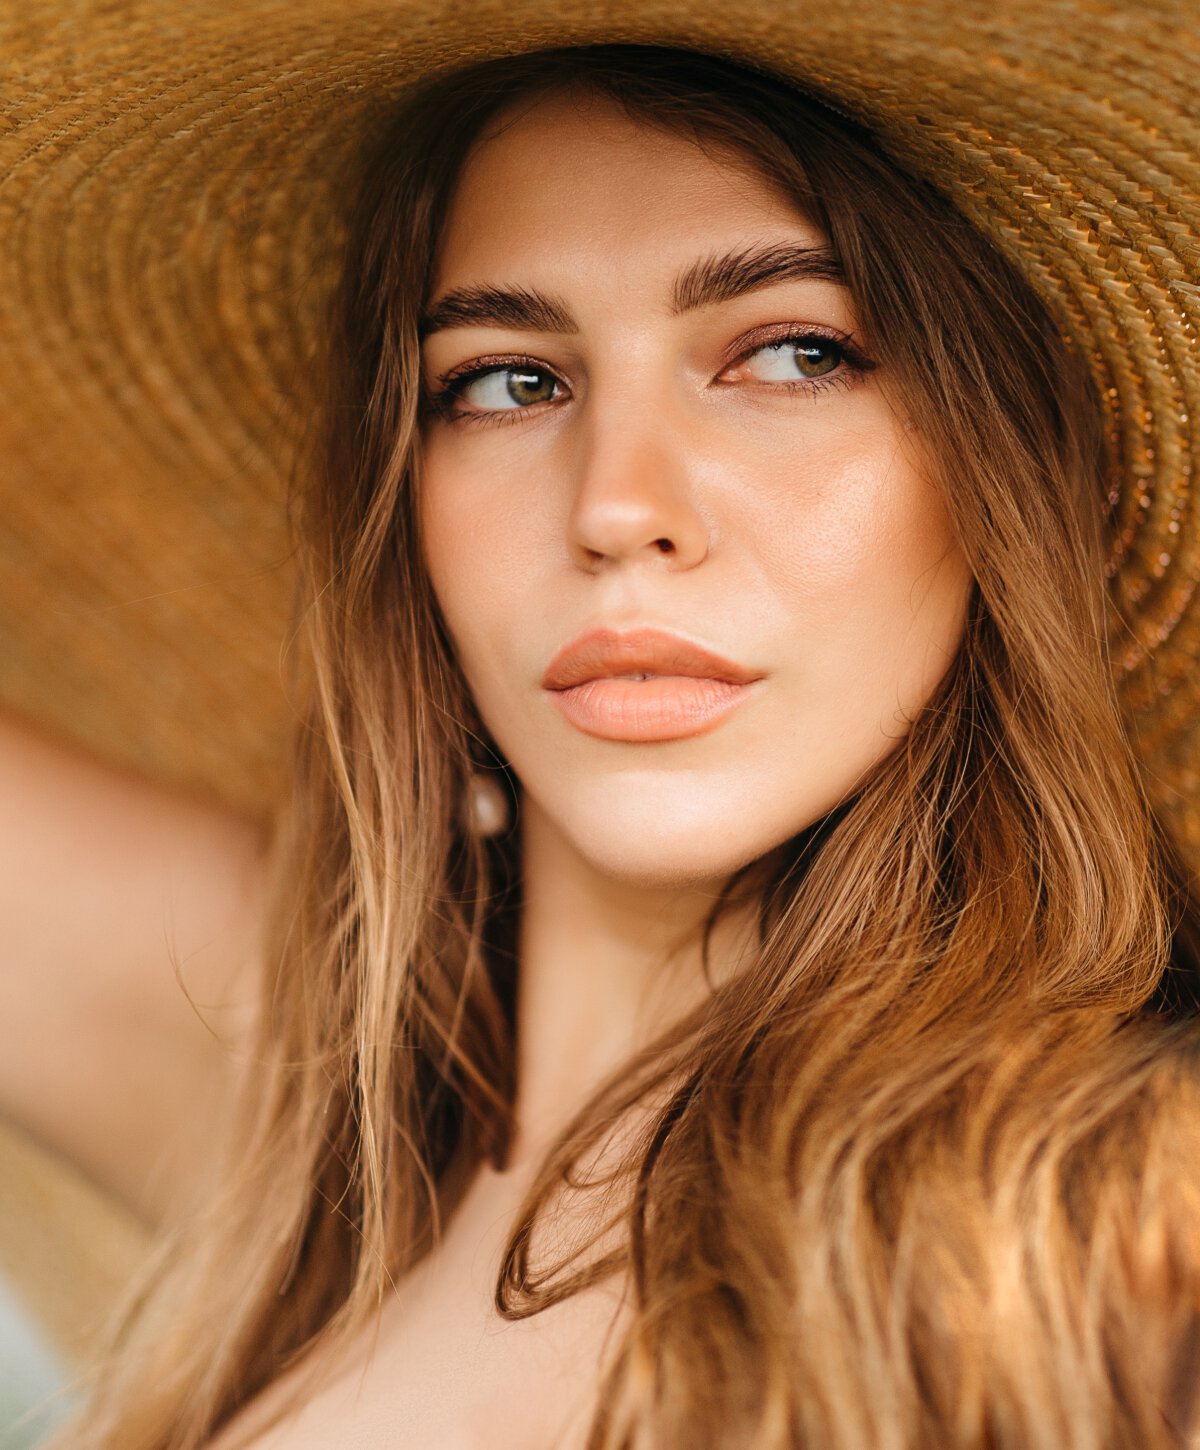 Los Angeles Hydrafacial model wearing hat